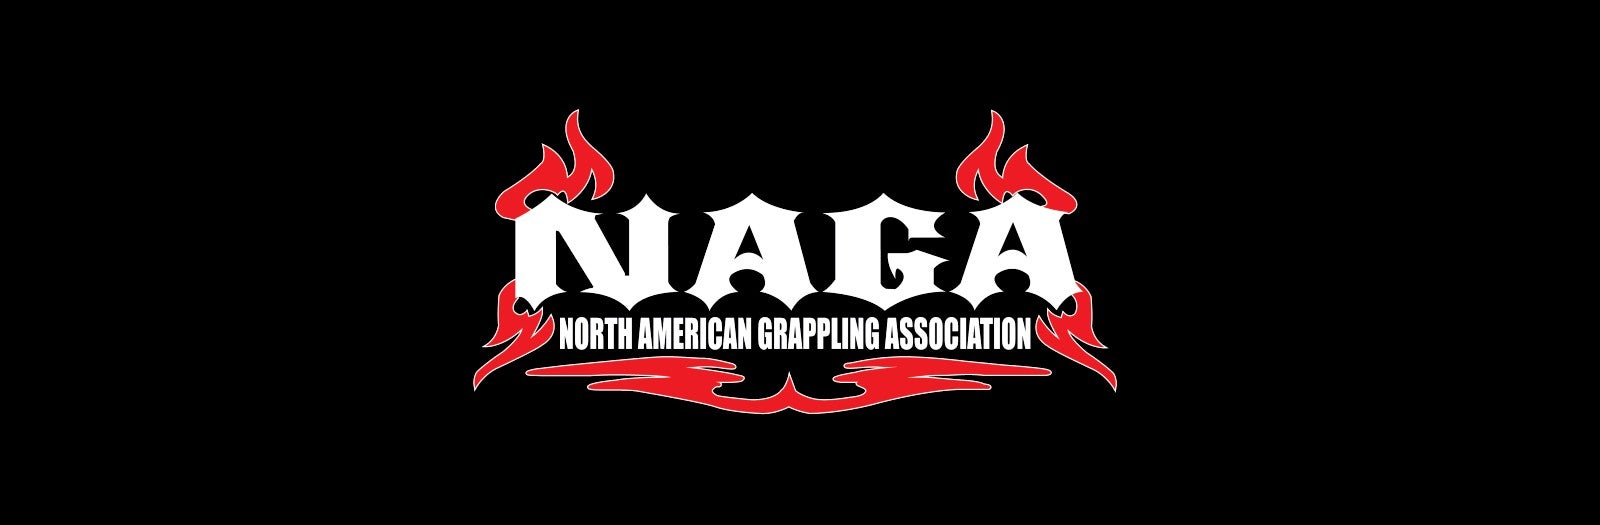 North American Grappling Association